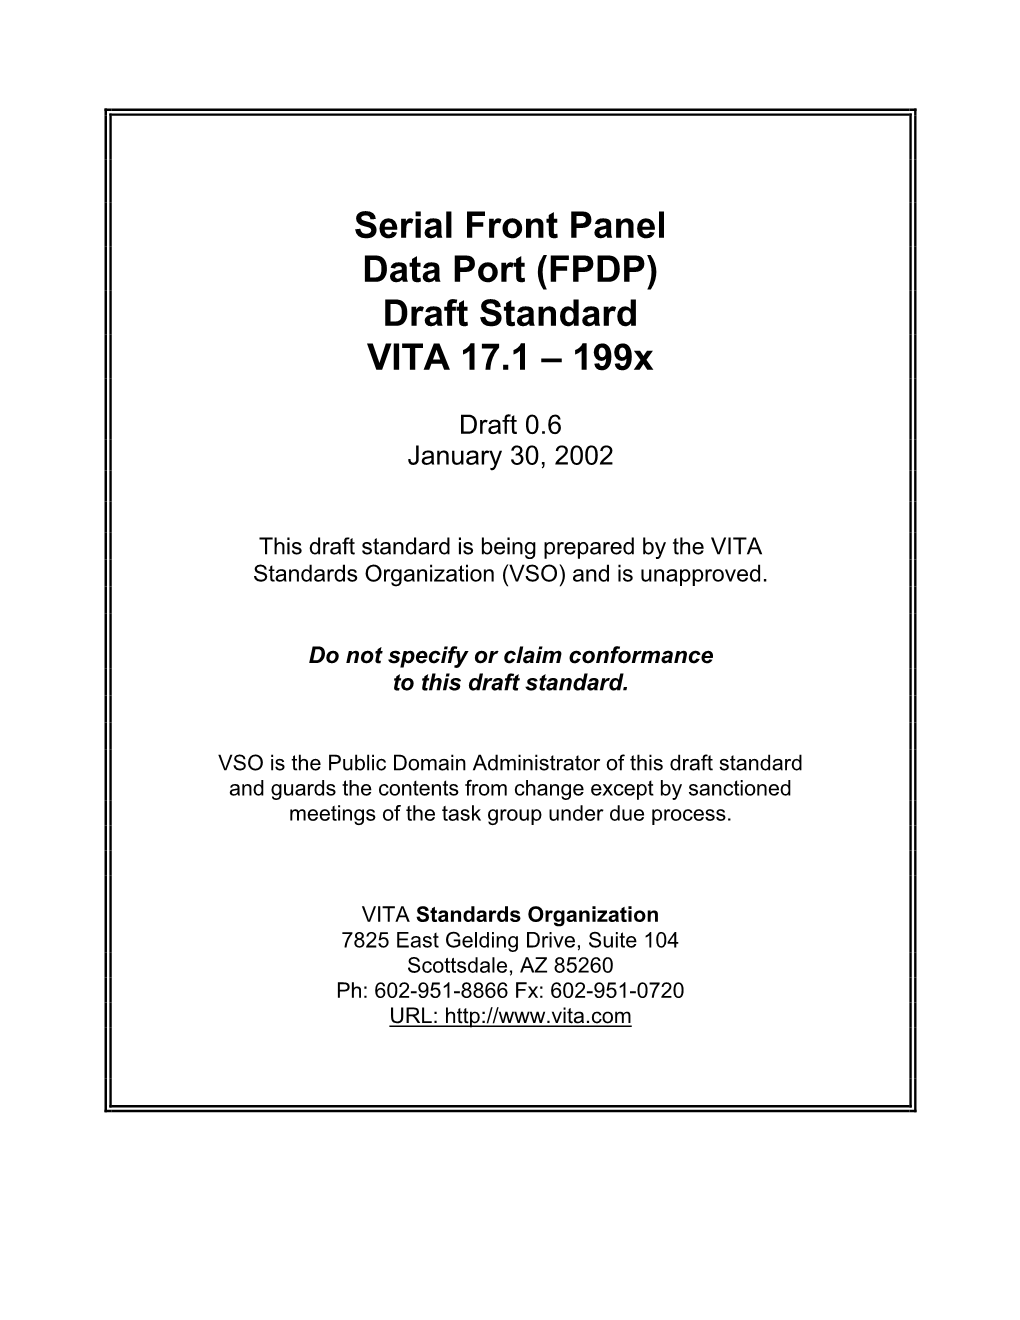 Serial Front Panel Data Port (FPDP) Draft Standard VITA 17.1 – 199X